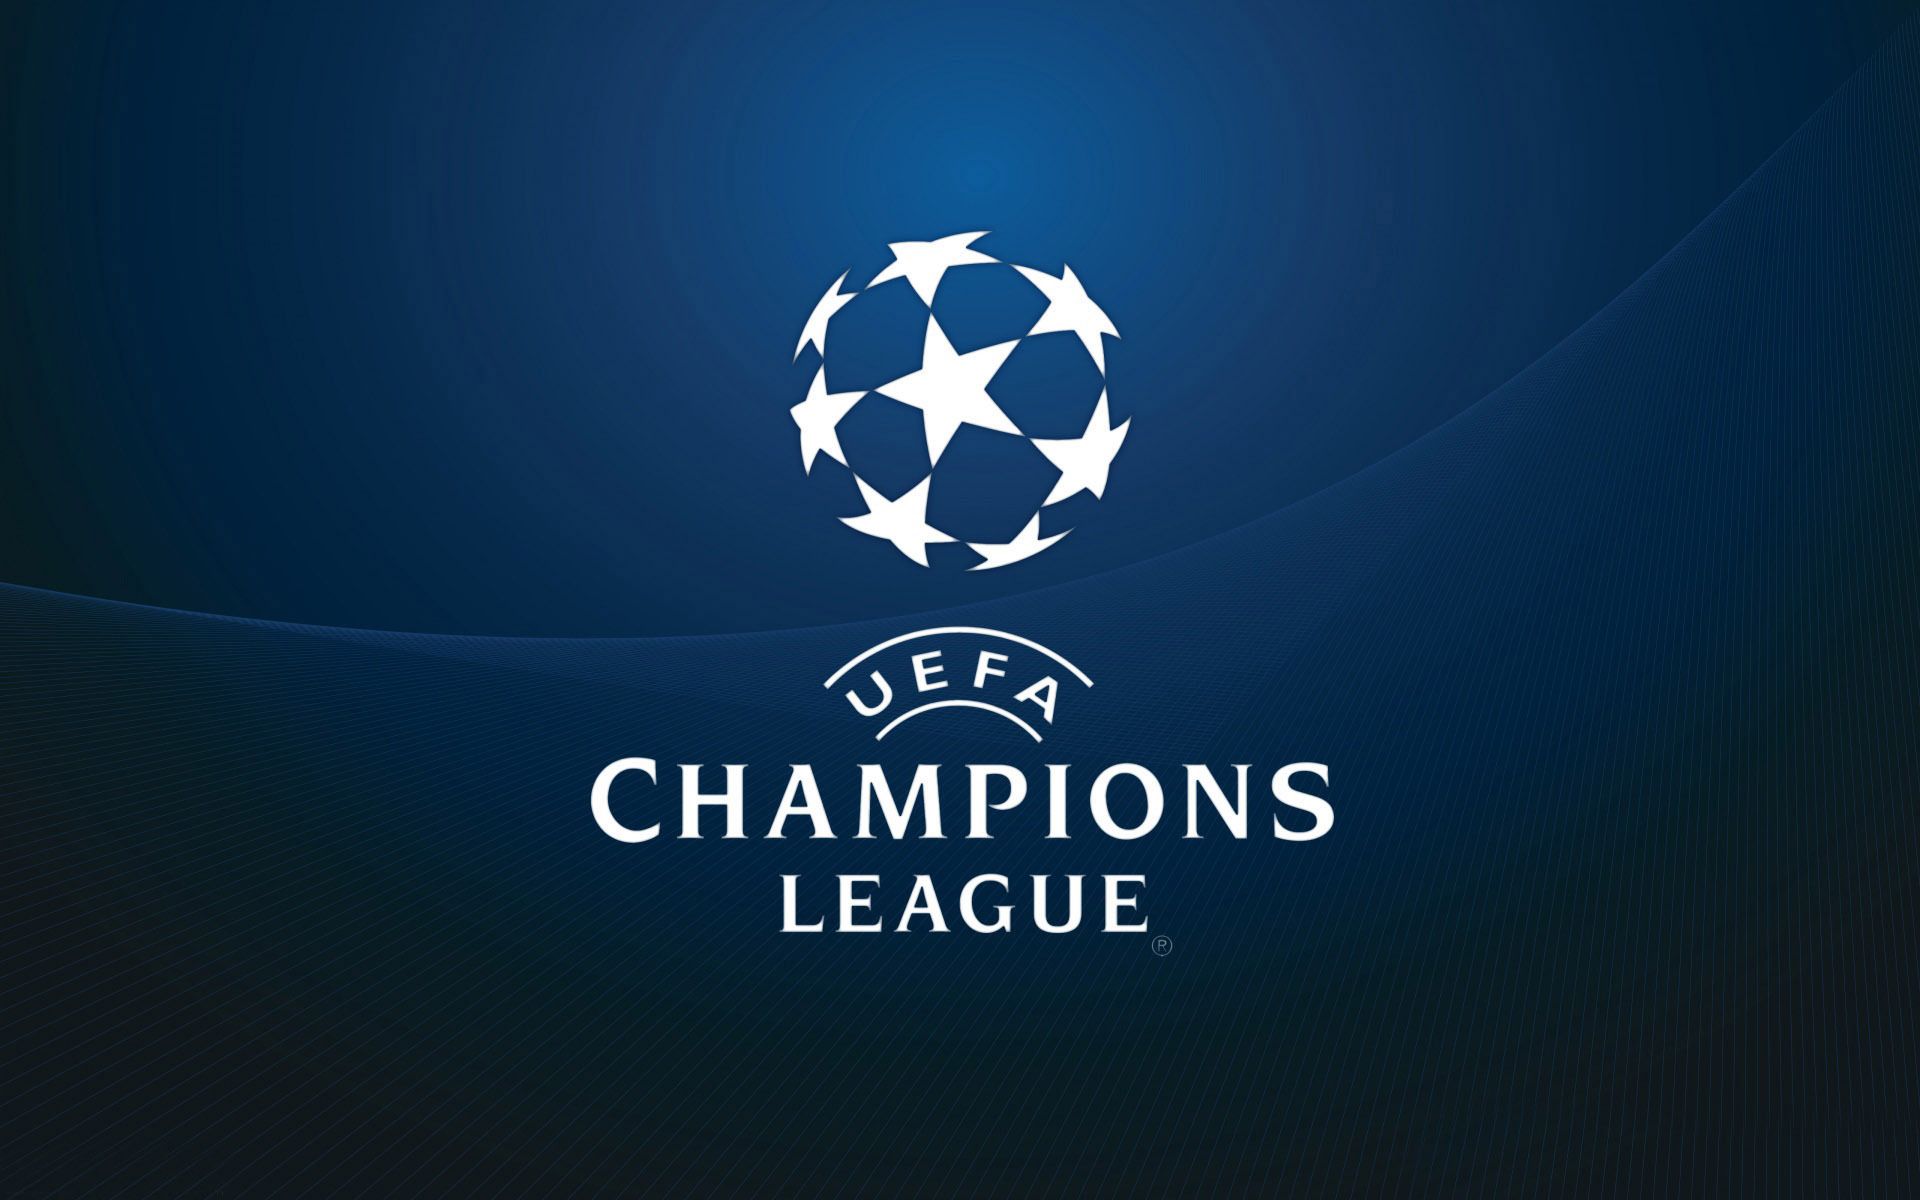 UEFA Champions League Wallpaper. Best HD Football Picture (mit Bildern). Galatasaray, Uefa champions league, Champions league